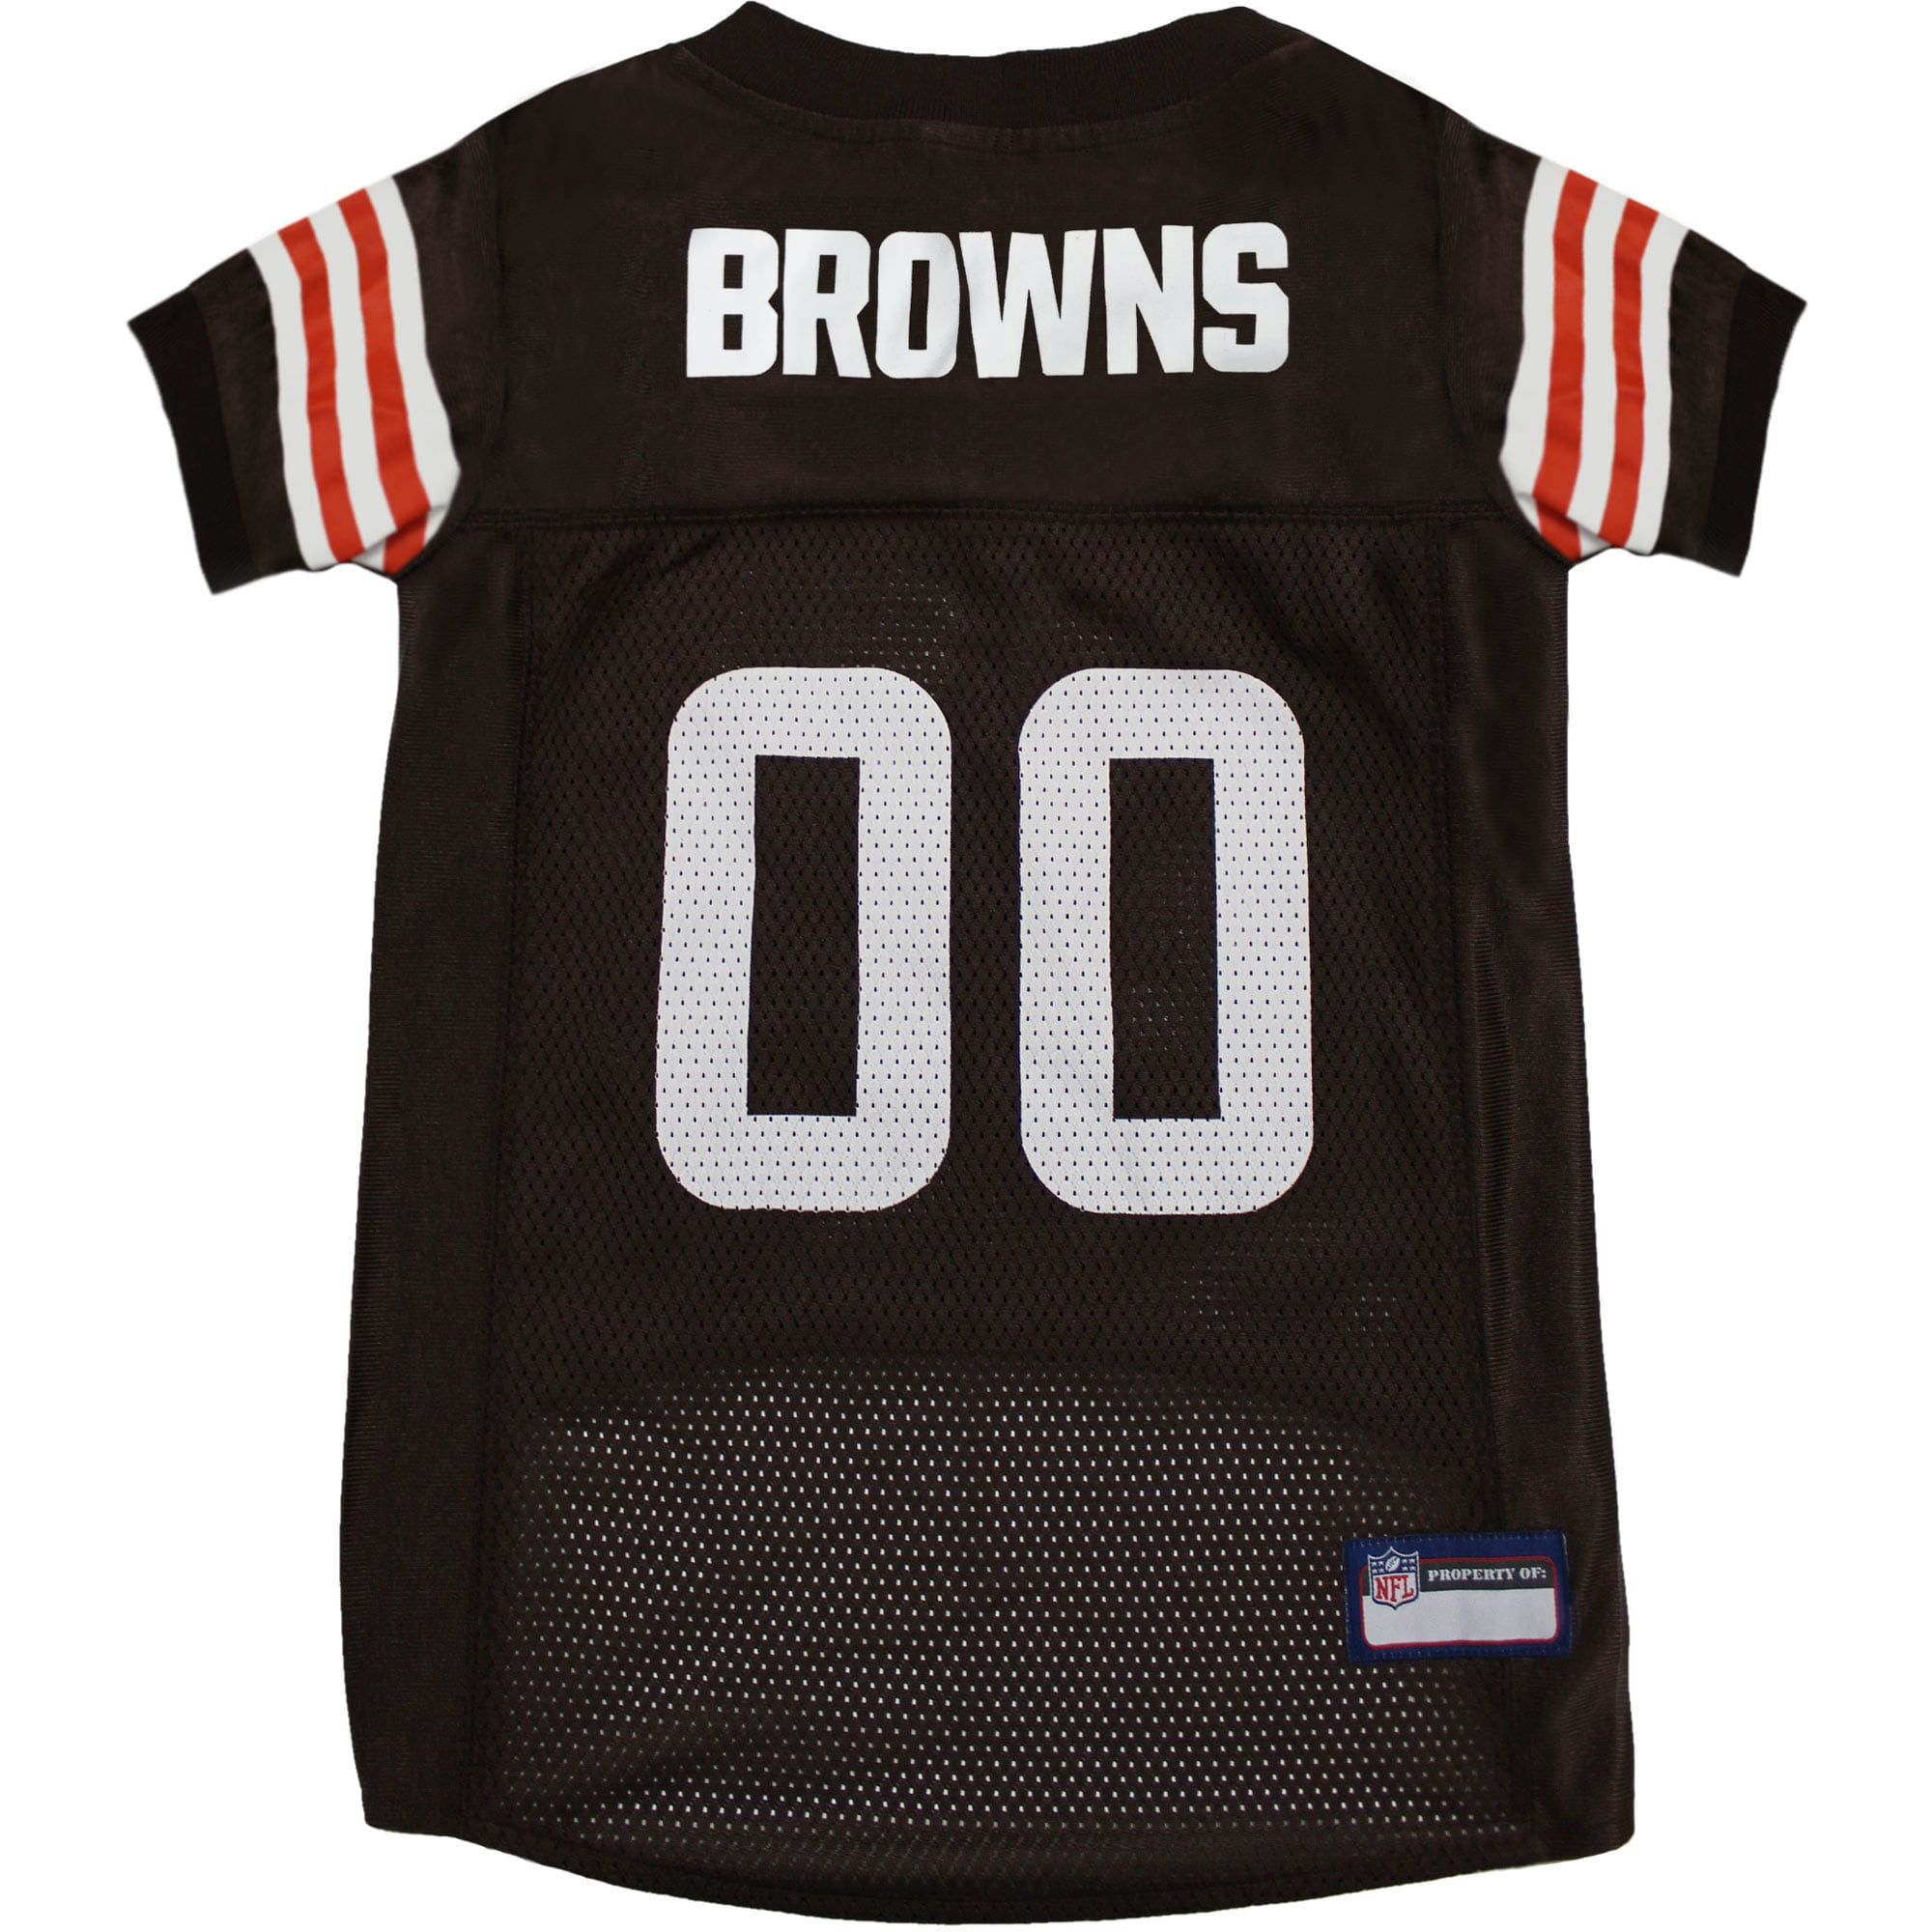 browns spirit jersey